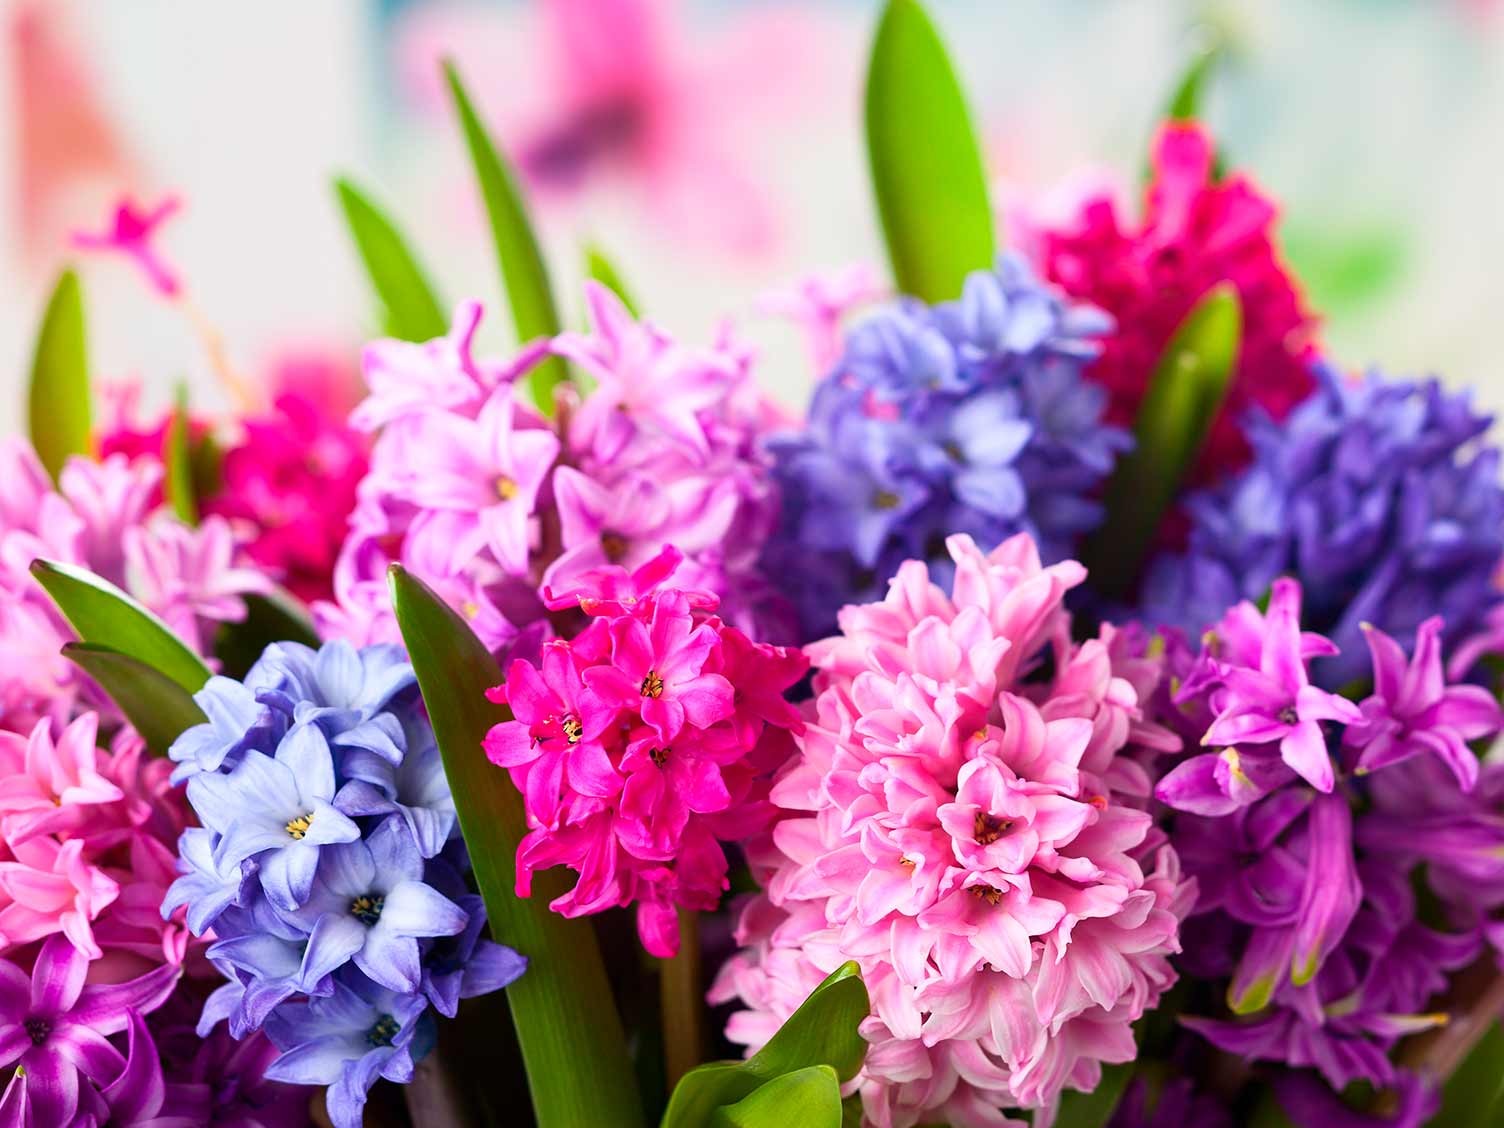 Colourful hyacinths